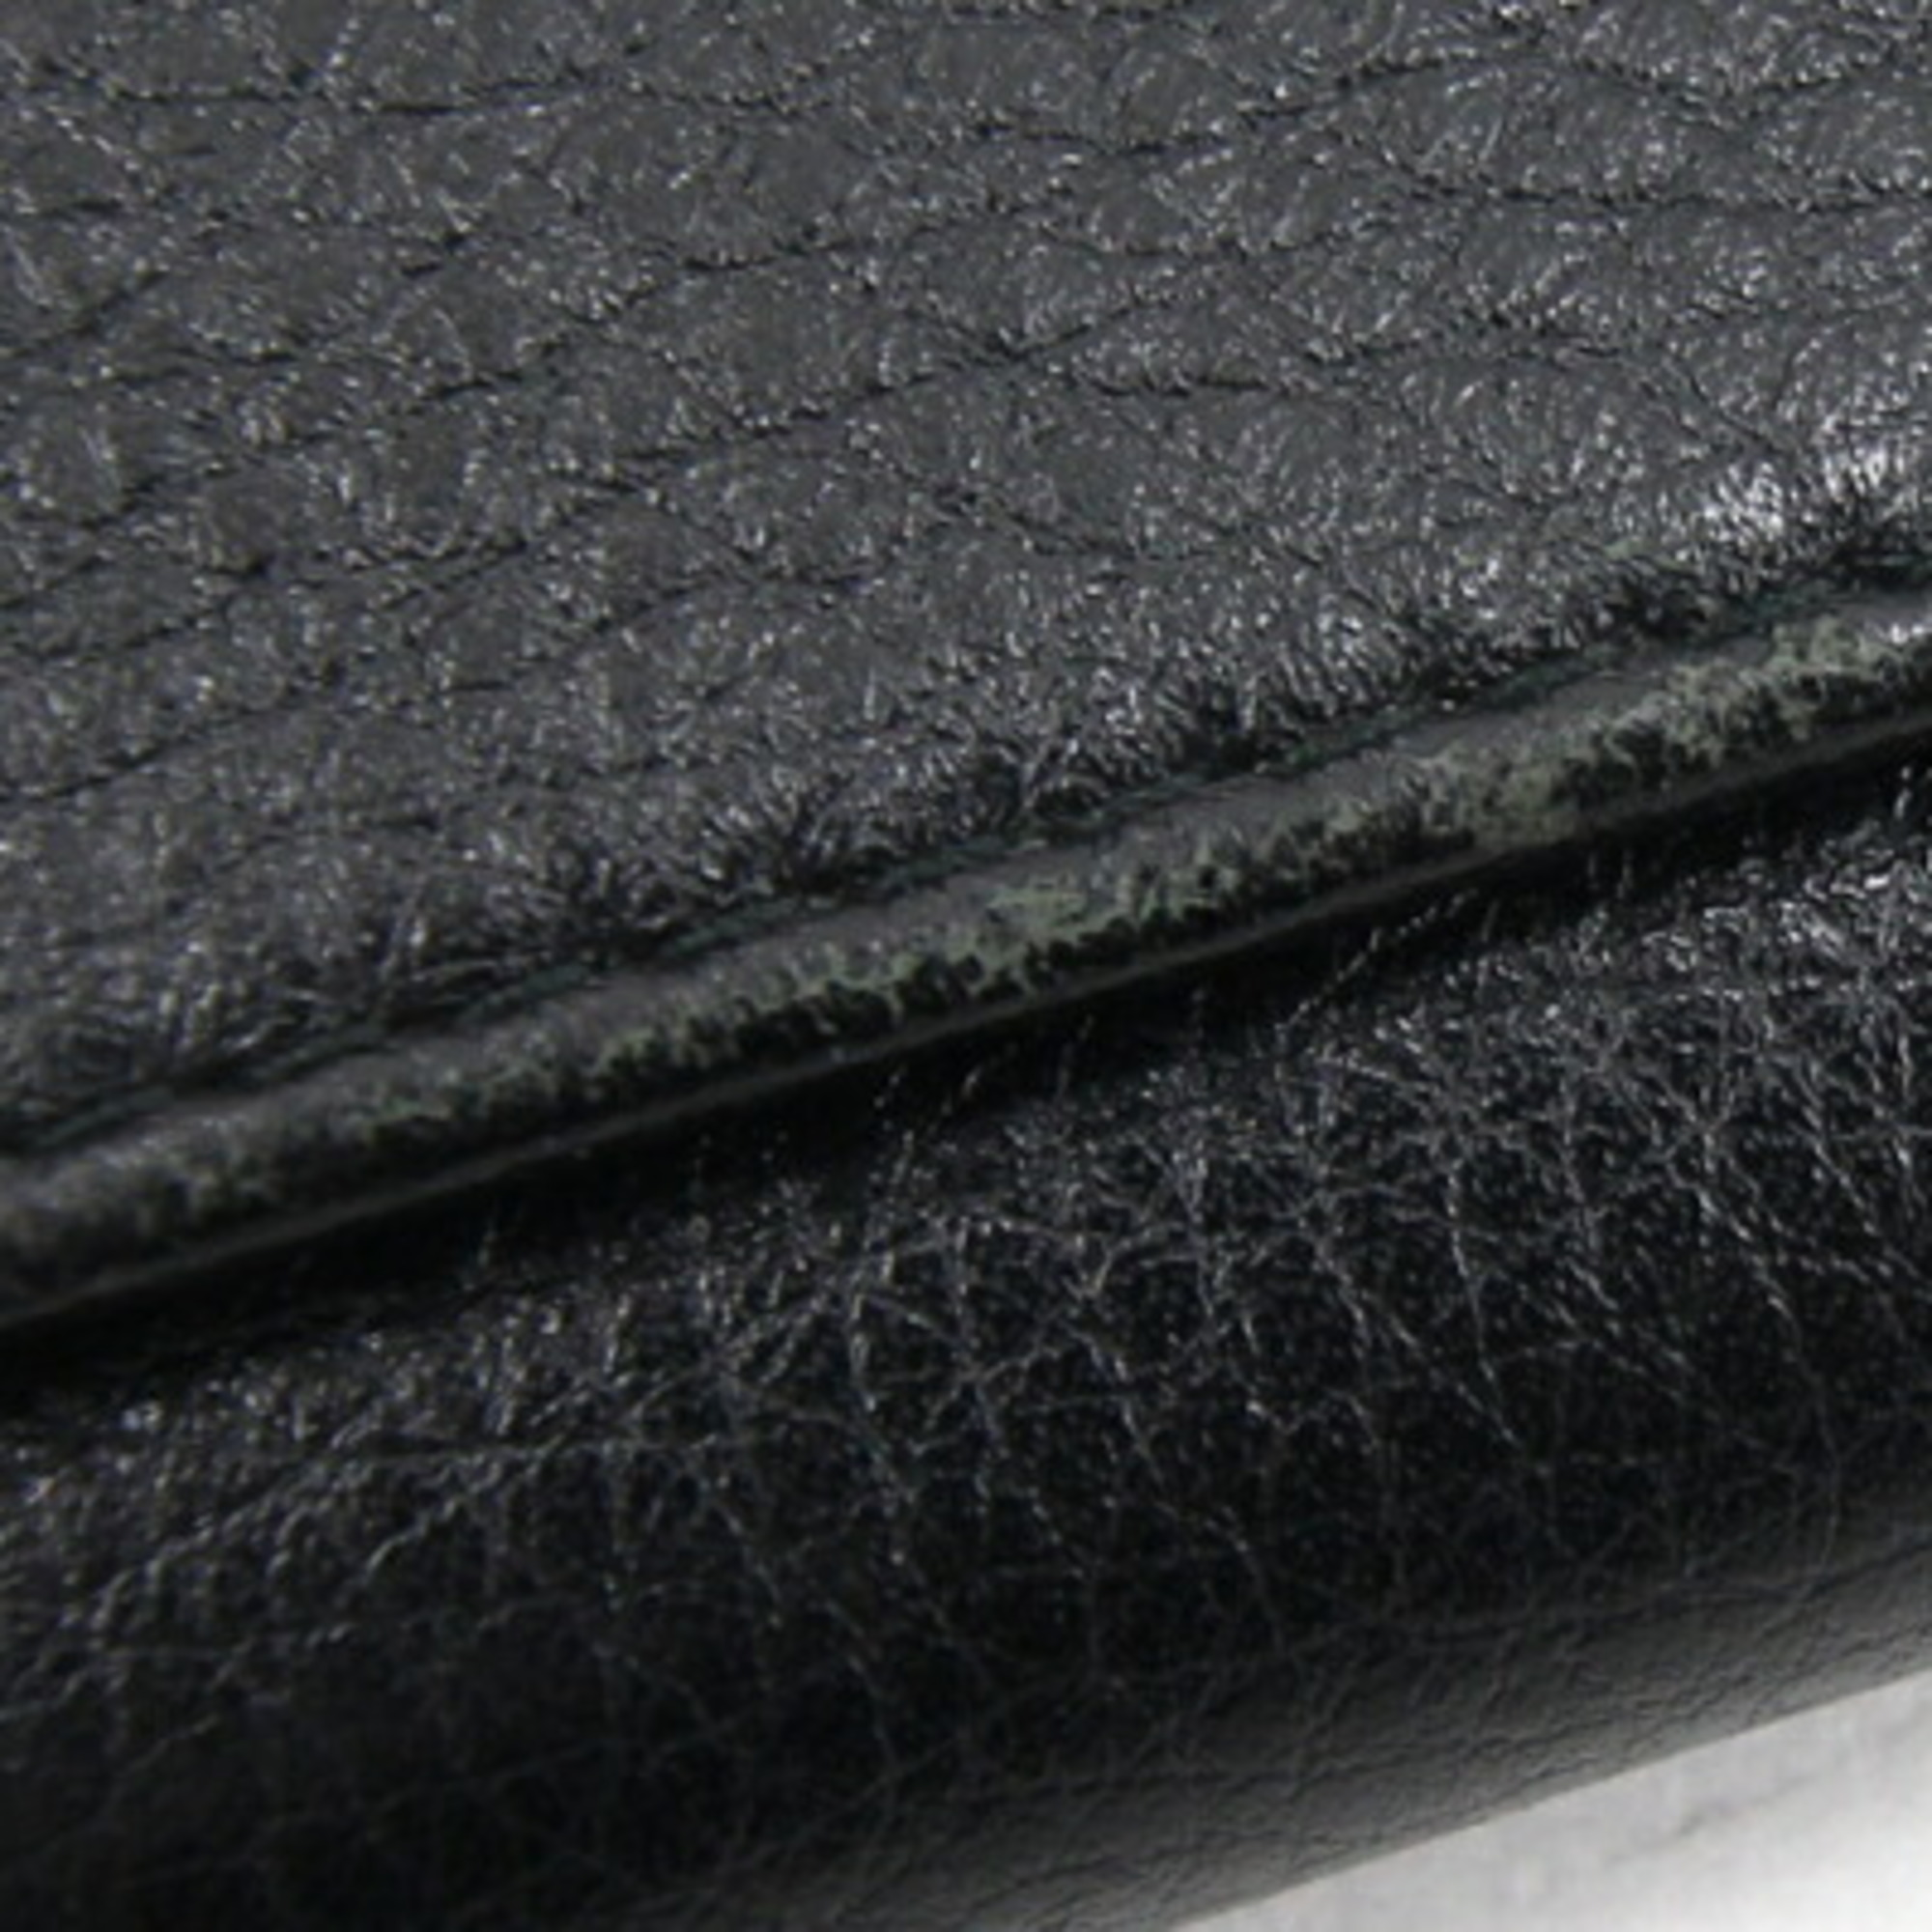 Prada Bi-fold Long Wallet 1MH132 Black Leather Women's Pass Case PRADA